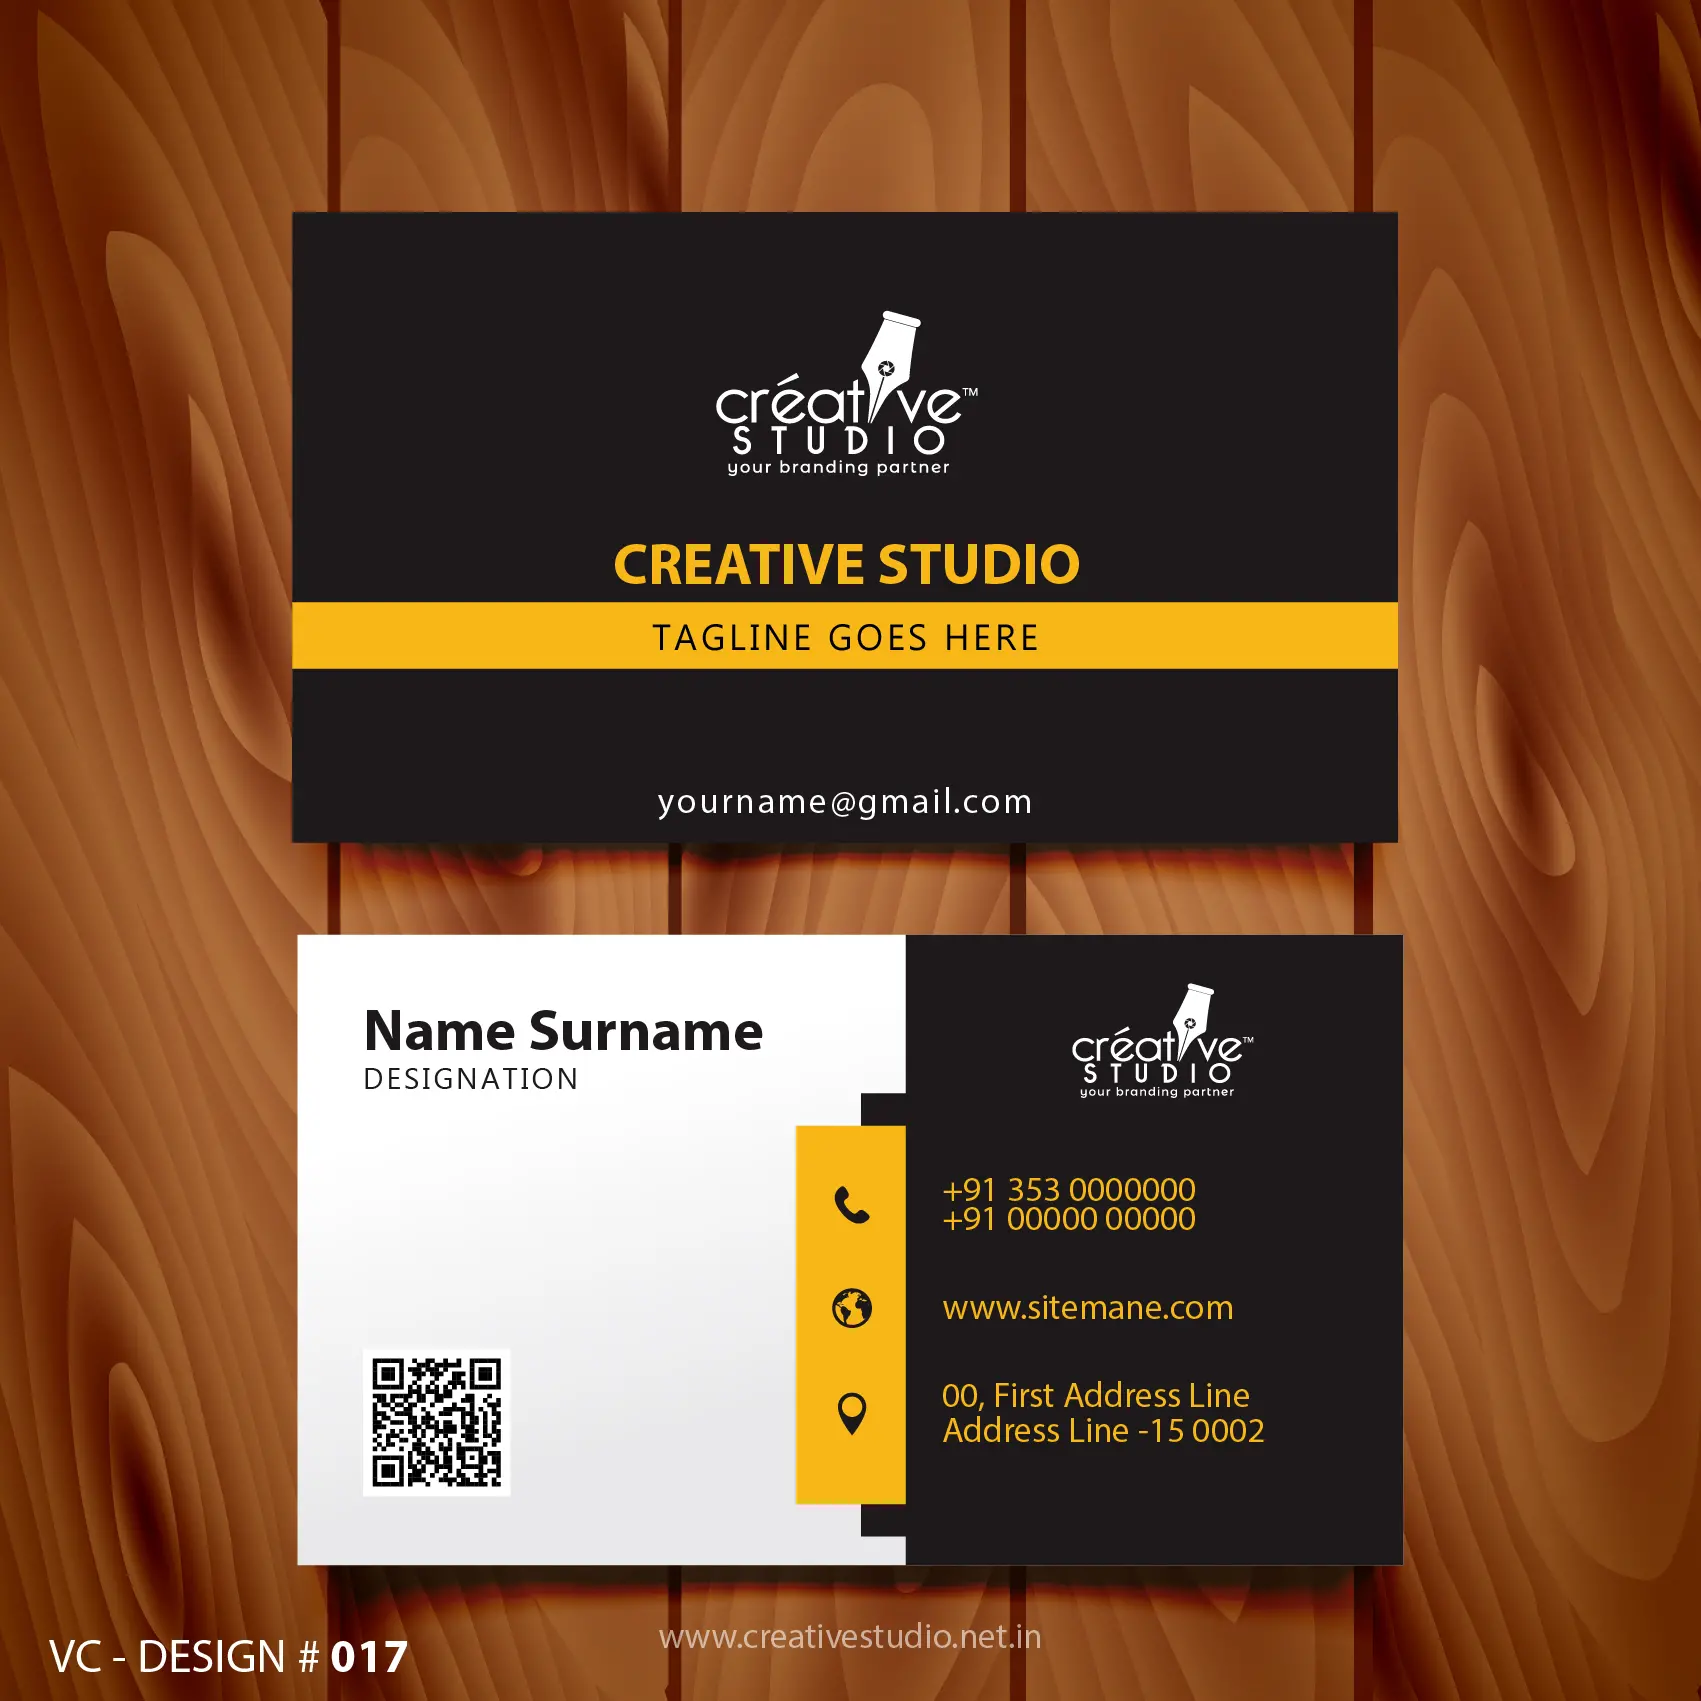 VC DESIGN 017 - Visiting Card Portfolio by Creative Studio